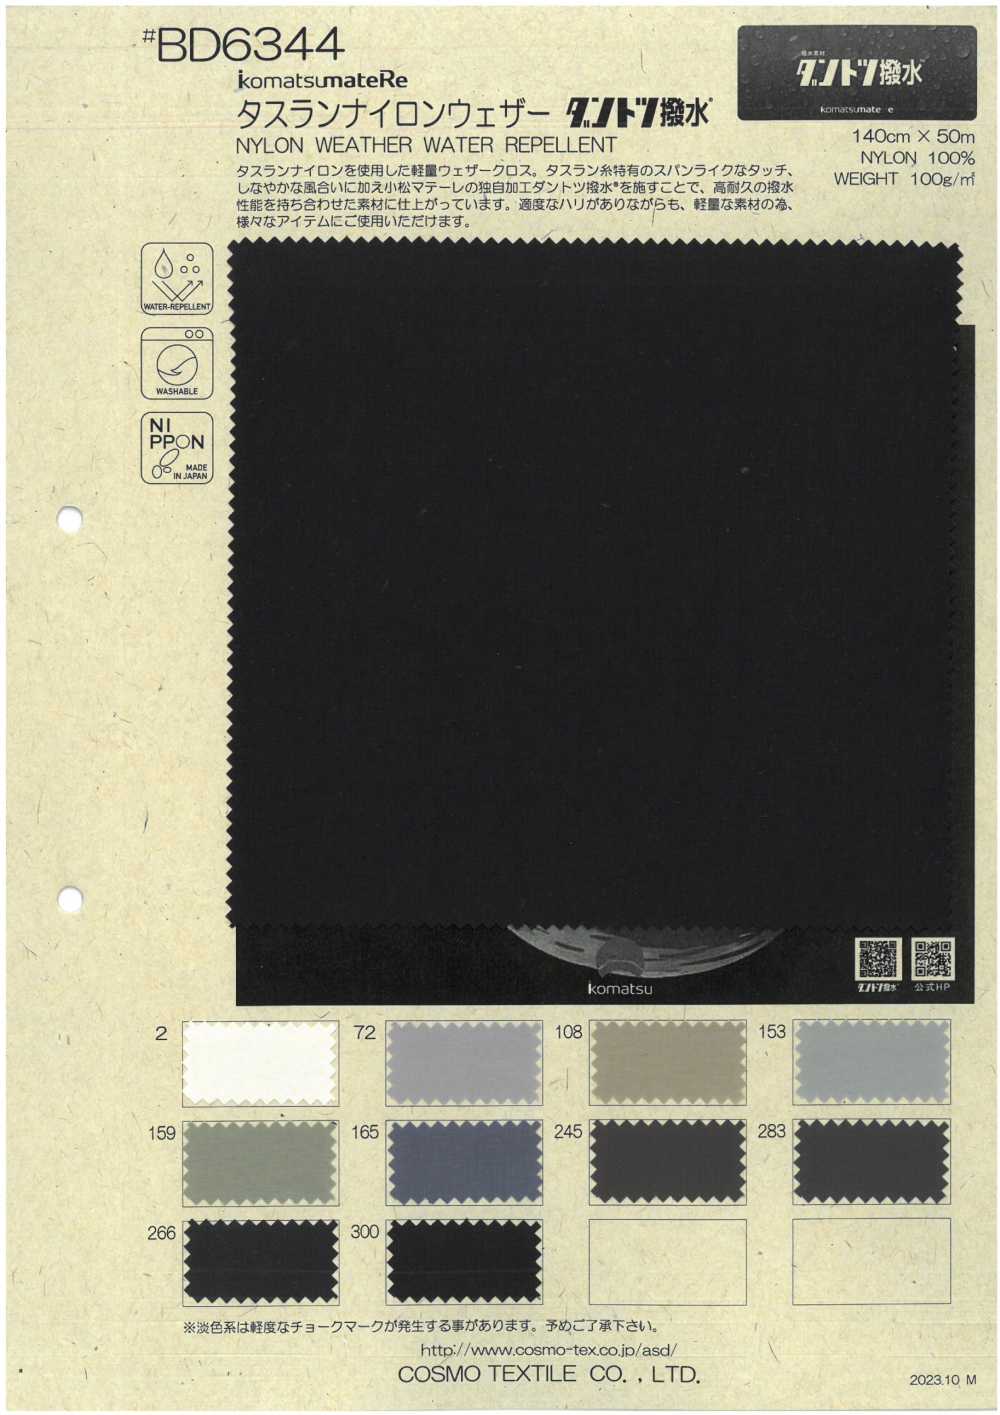 BD6344 Chiffon En Nylon Komatsu Matere Taslan[Fabrication De Textile] COSMO TEXTILE